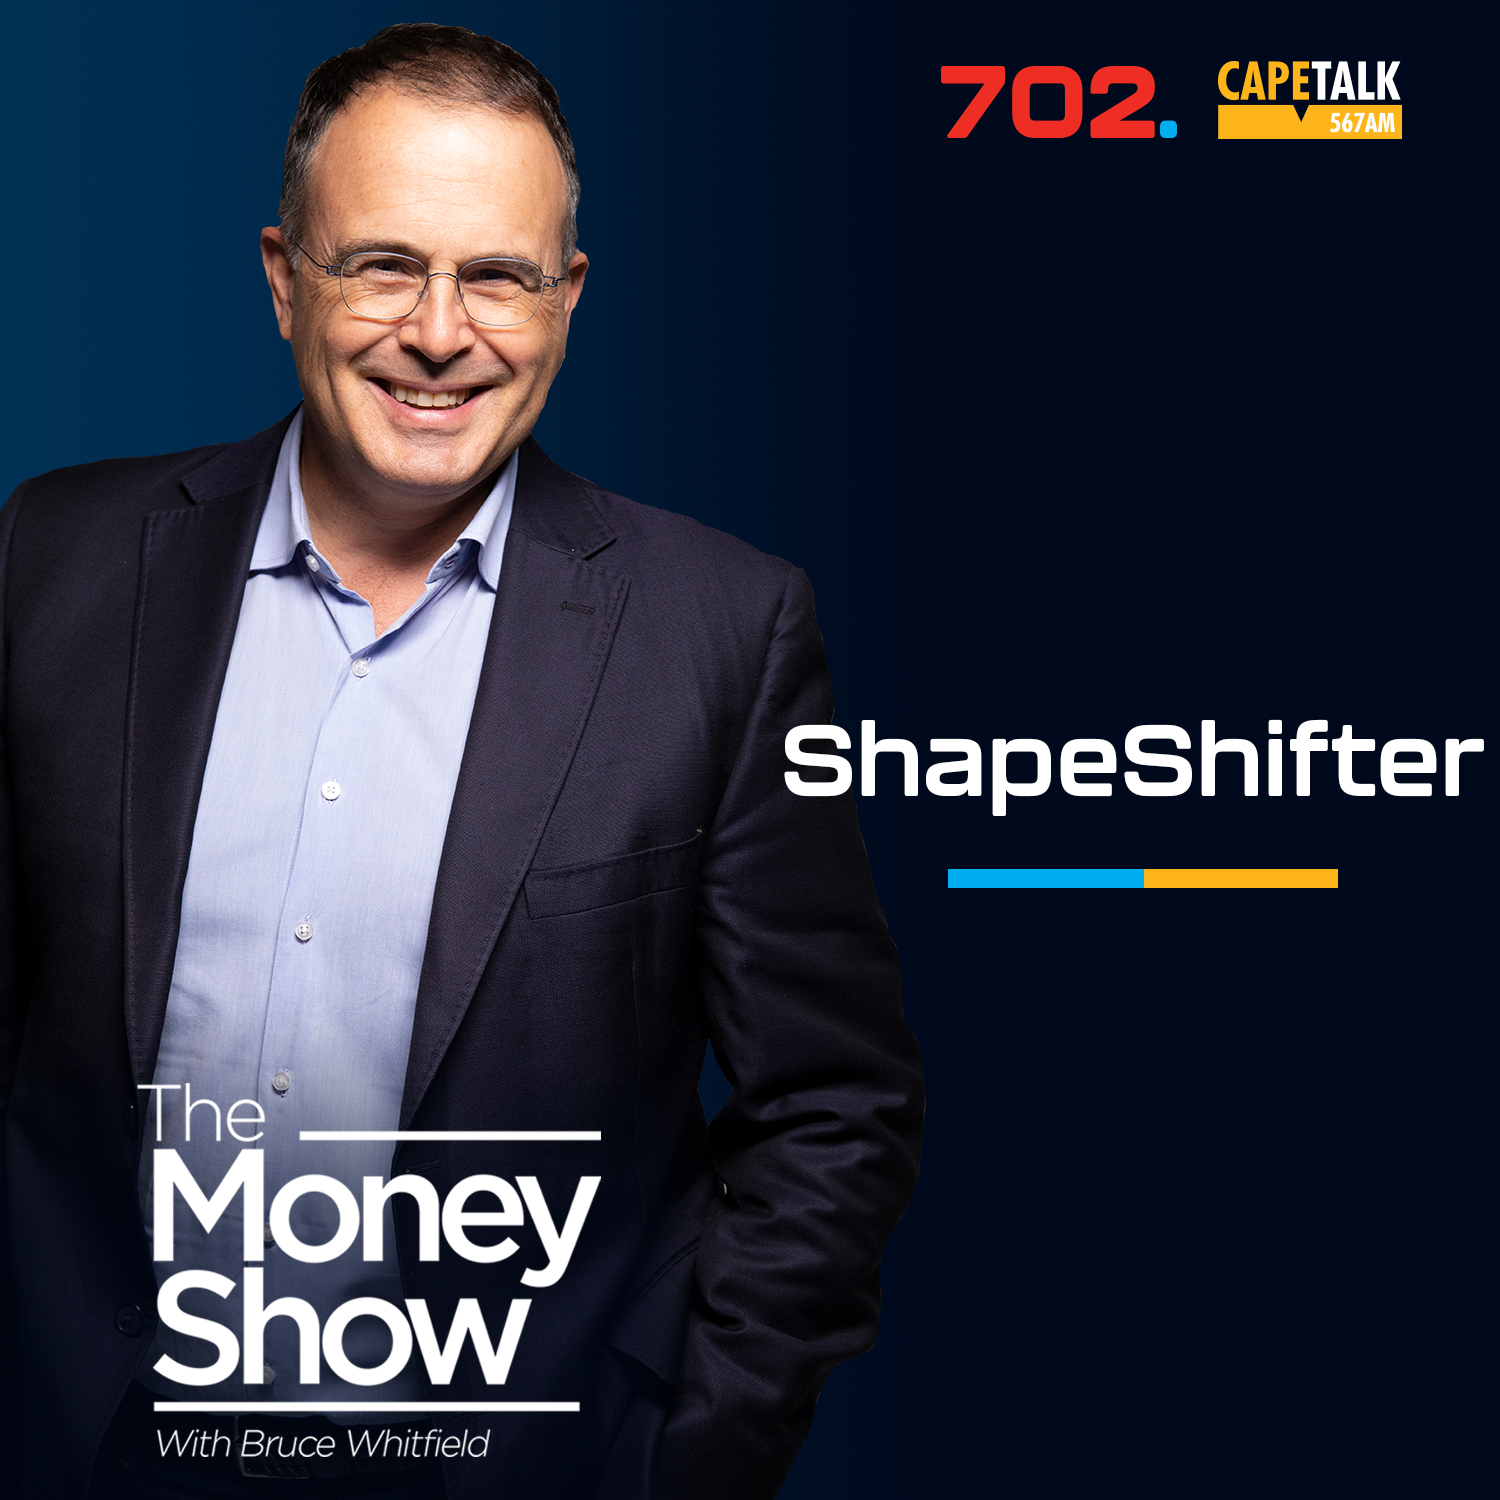 Shapeshifter - Jonathan Hurvitz, CEO of Teljoy